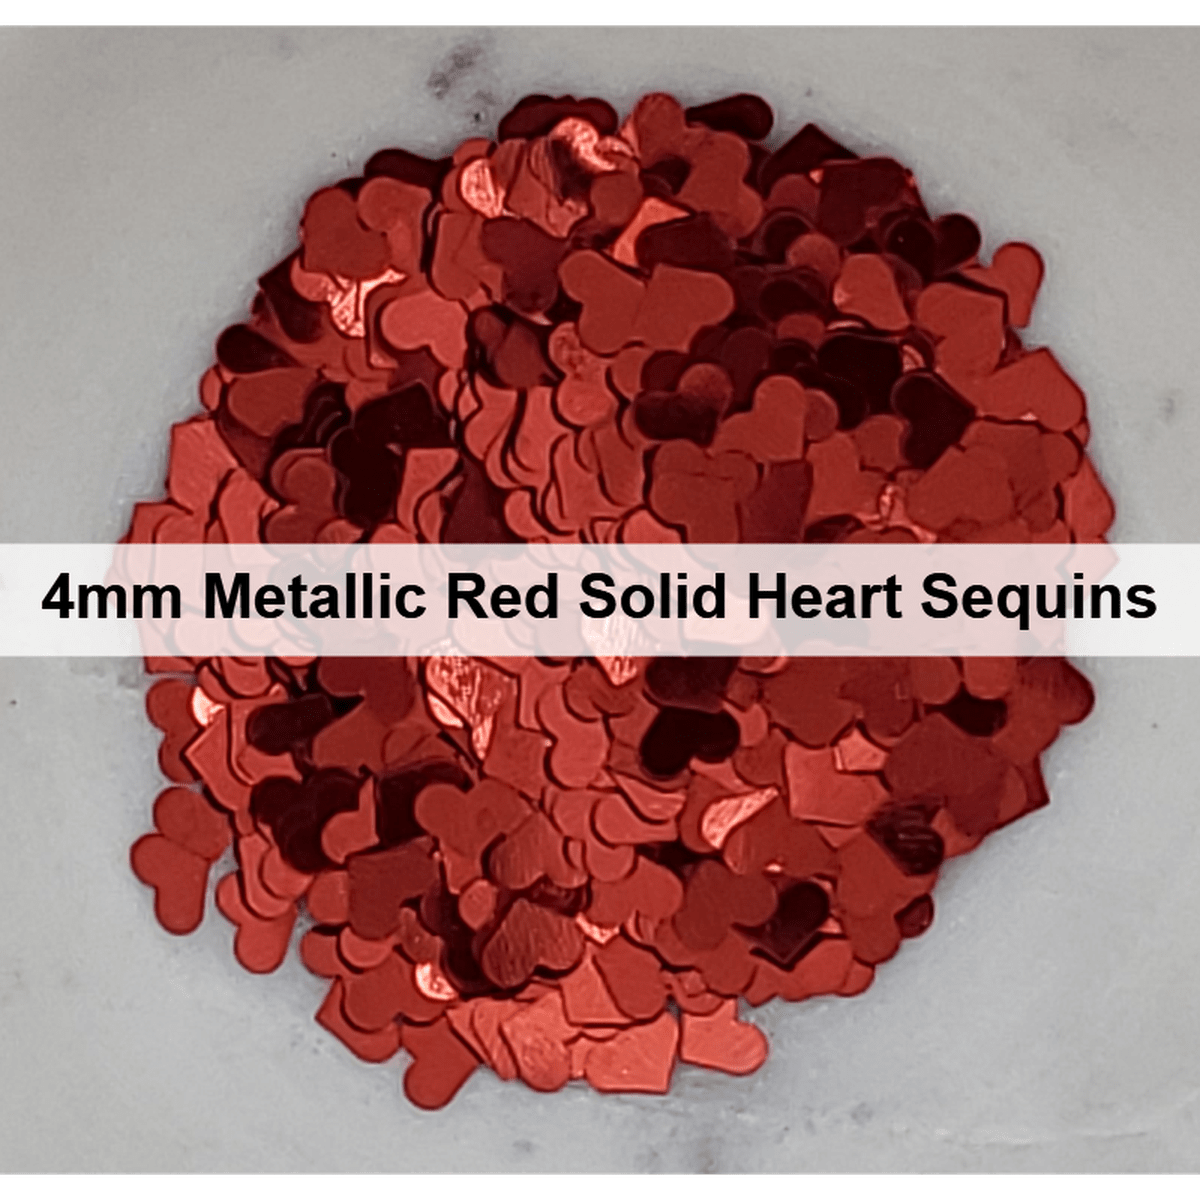 4mm Metallic Red Solid Heart Sequins - Kat Scrappiness